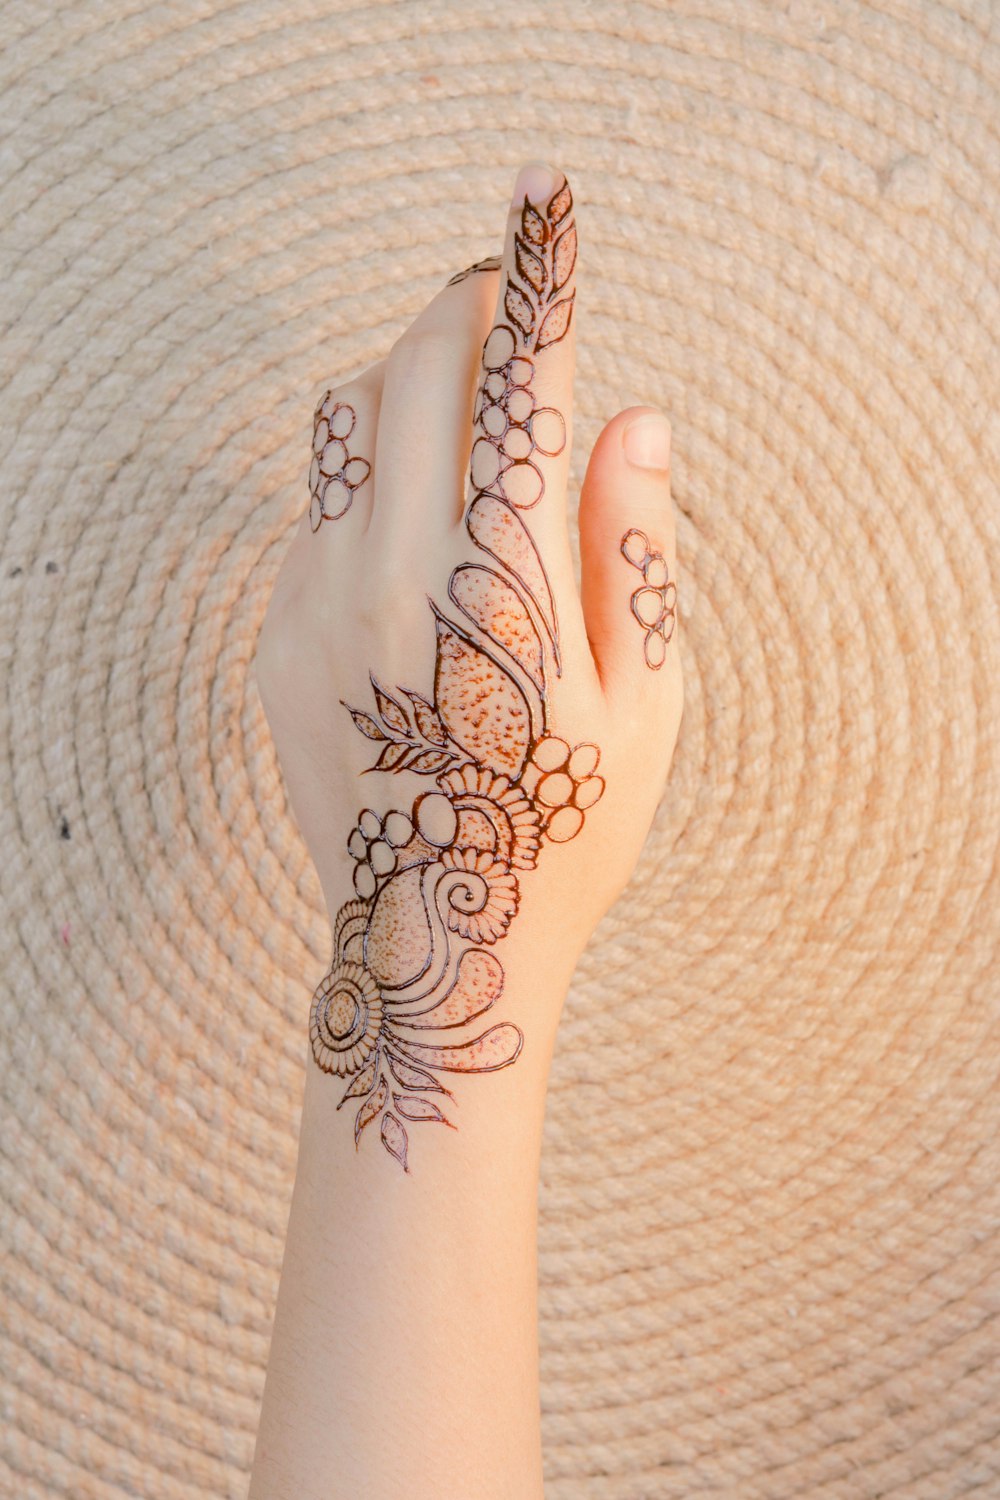 Henna tattoo photo – Free Brown Image on Unsplash